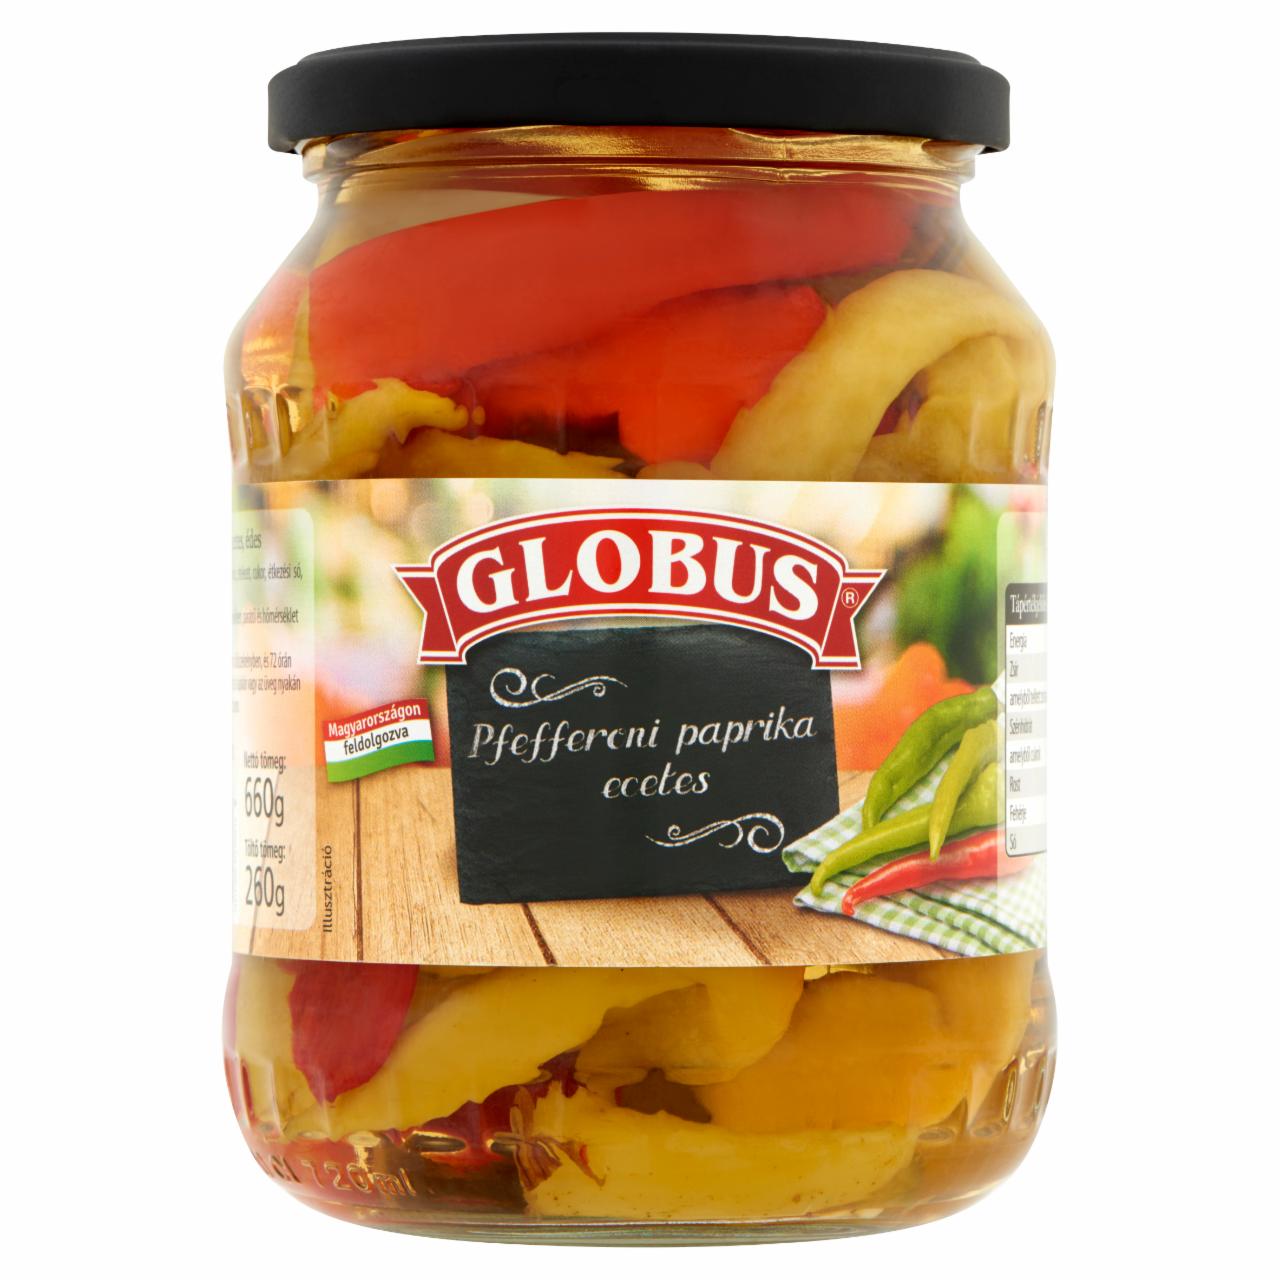 Képek - Globus ecetes pfefferoni paprika 660 g